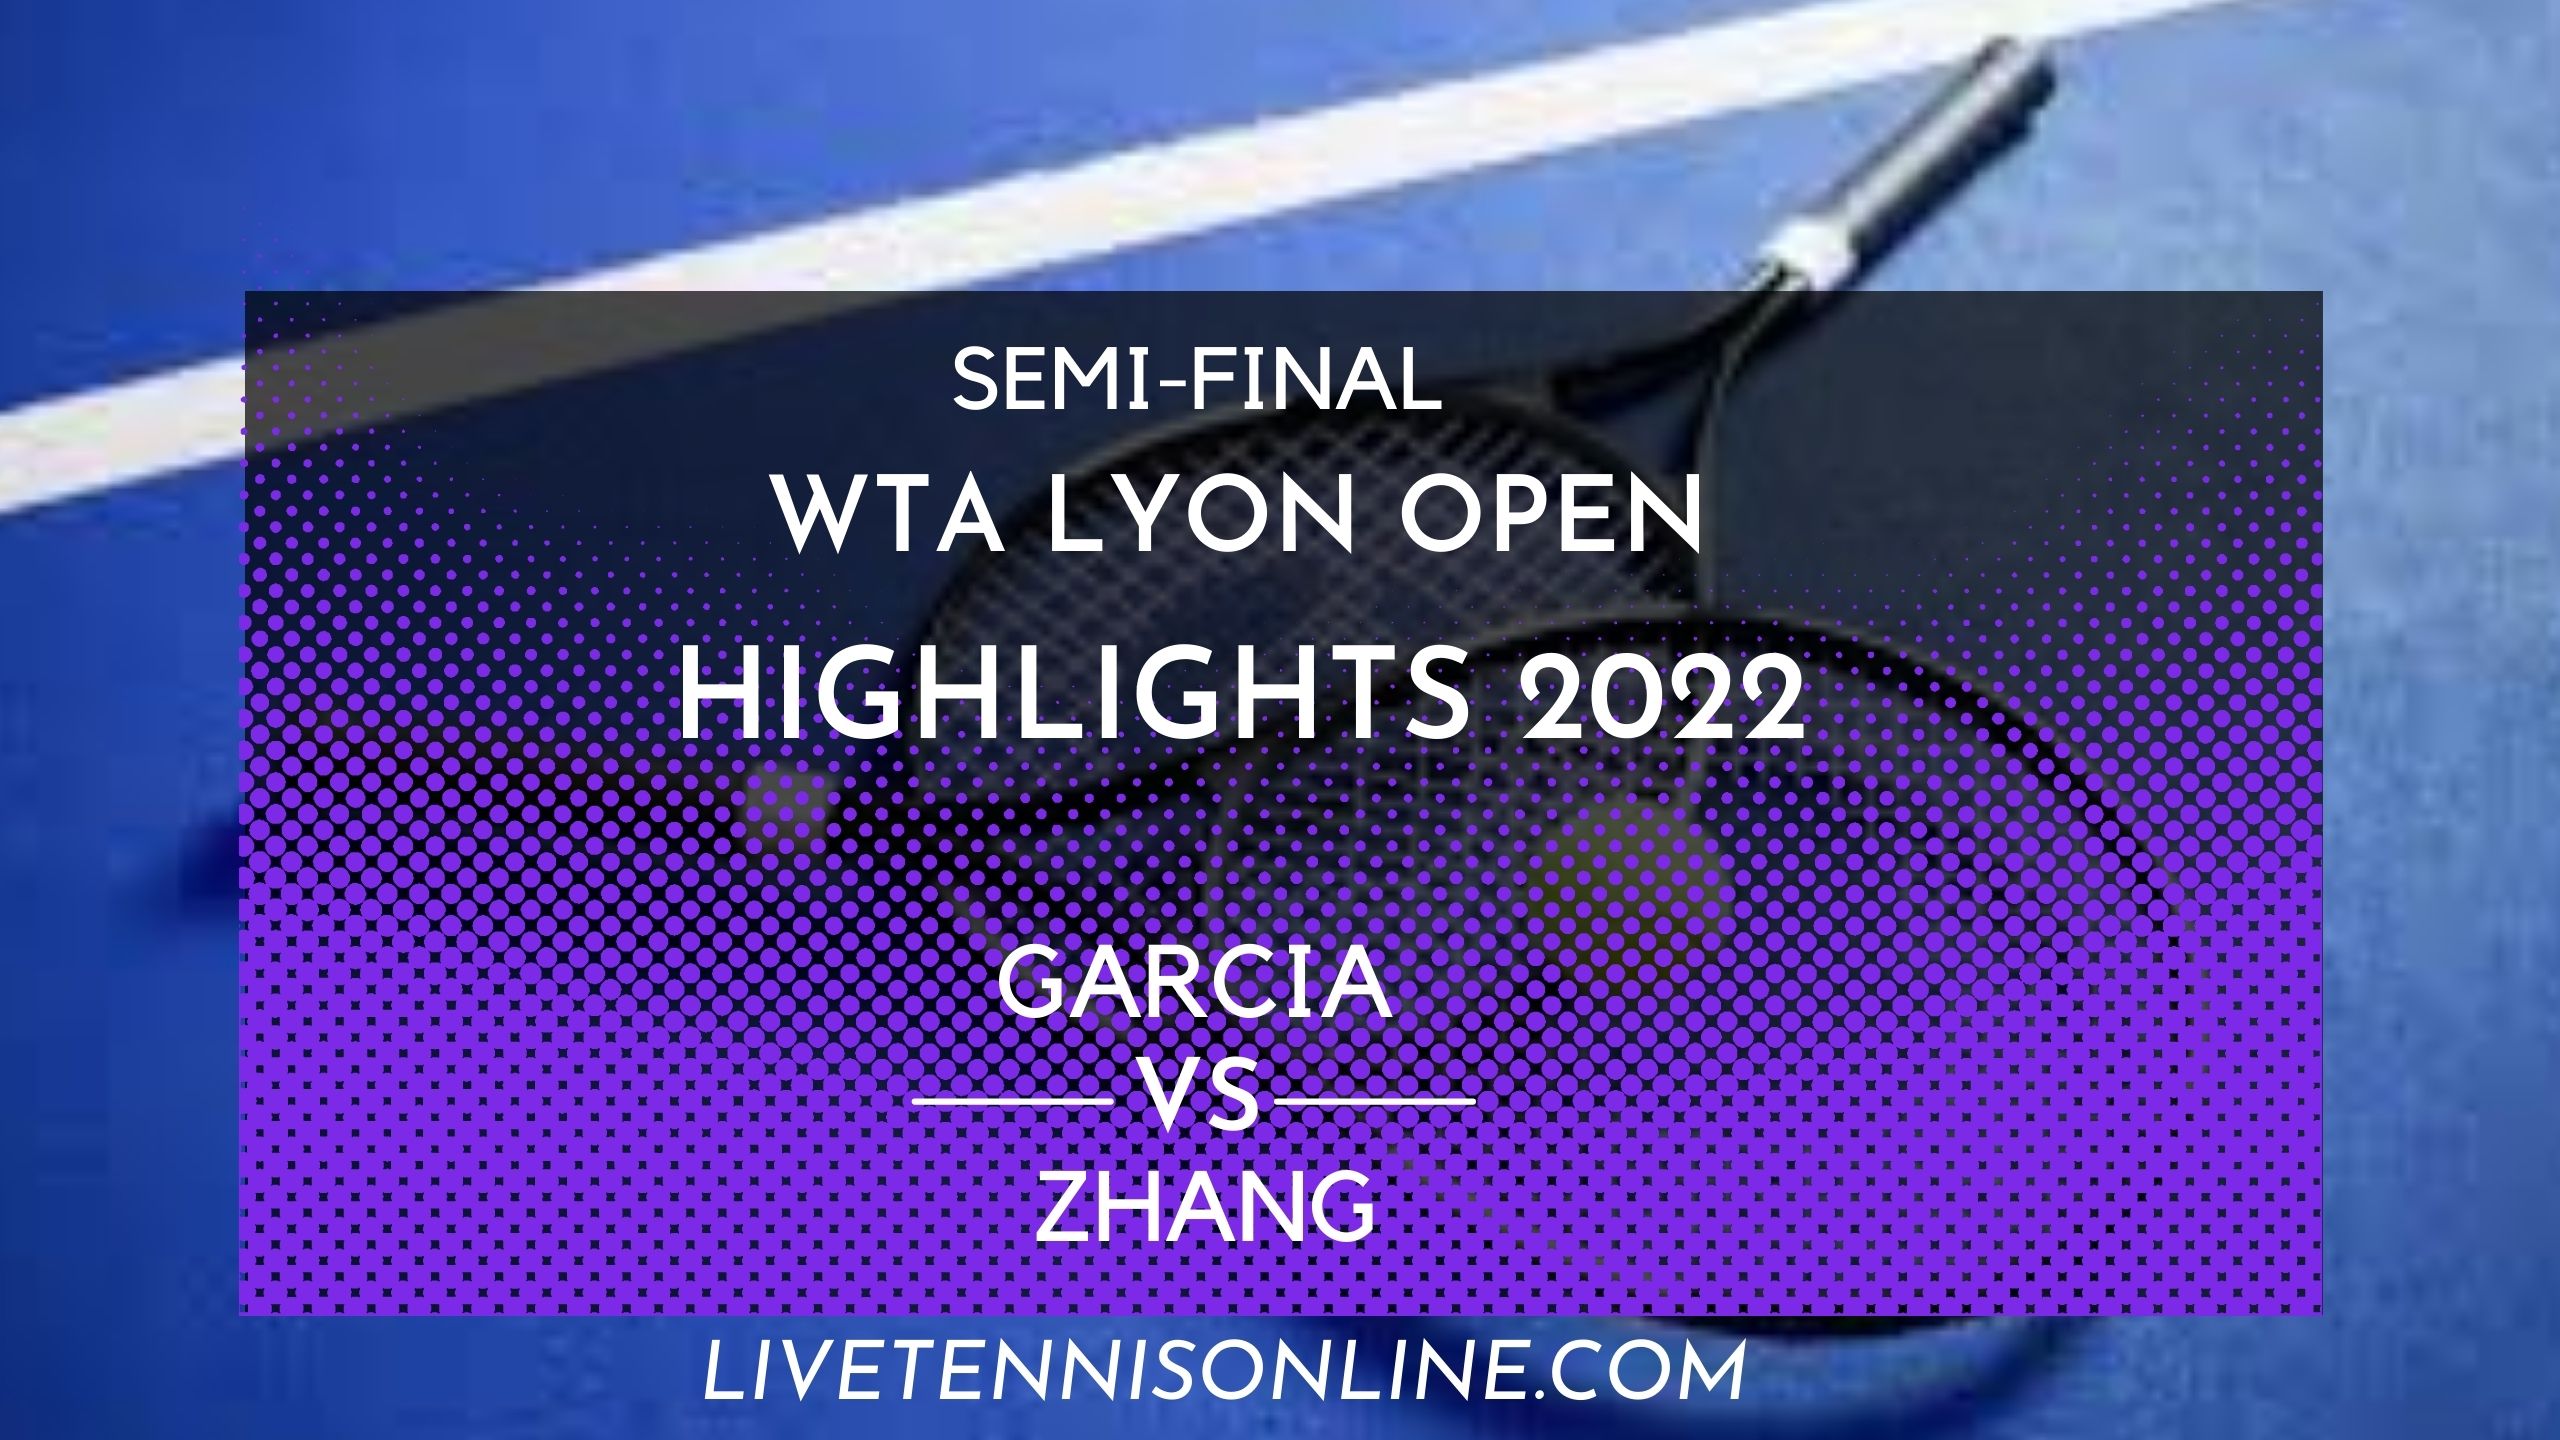 Garcia Vs Zhang SF Highlights 2022 Lyon Open